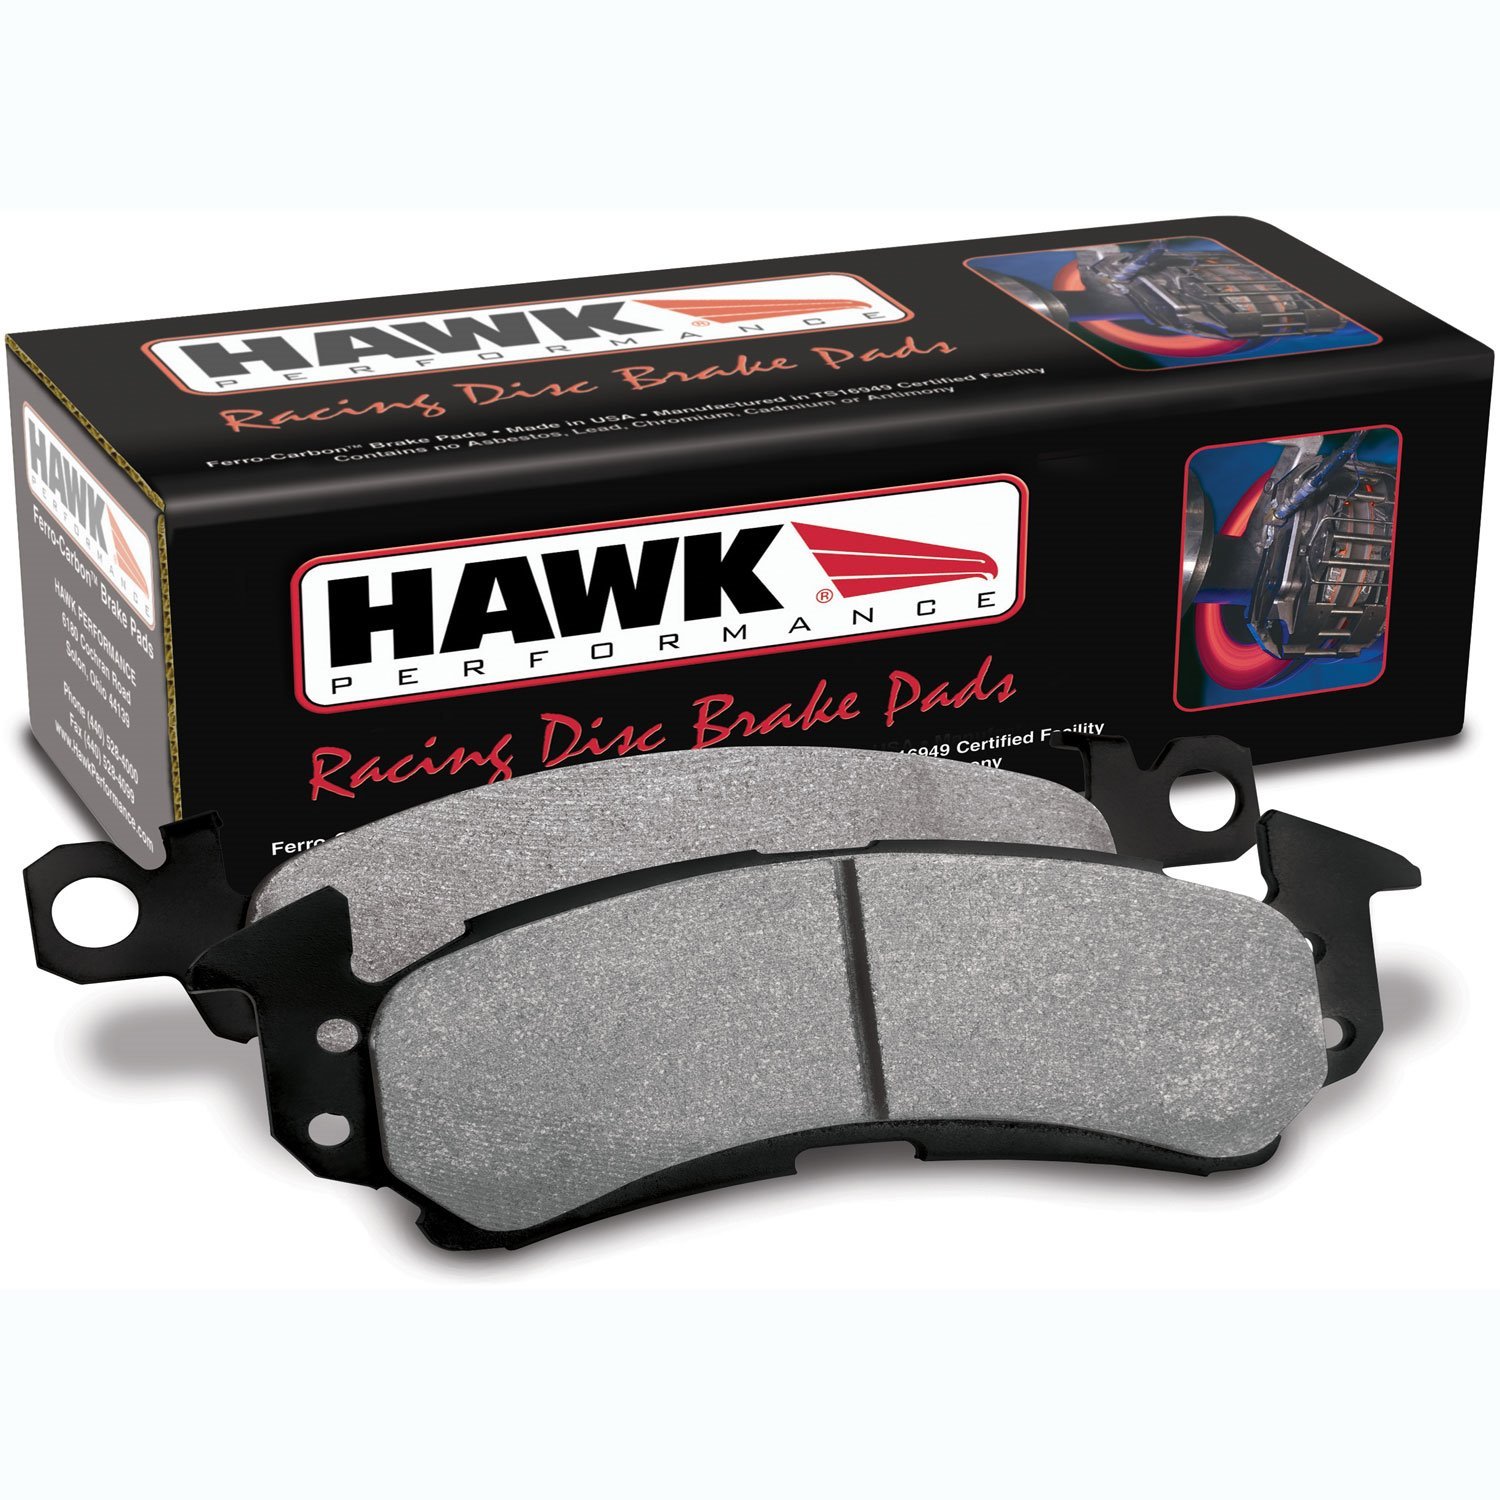 Disc Brake Pad HP Plus w/0.634 Thickness